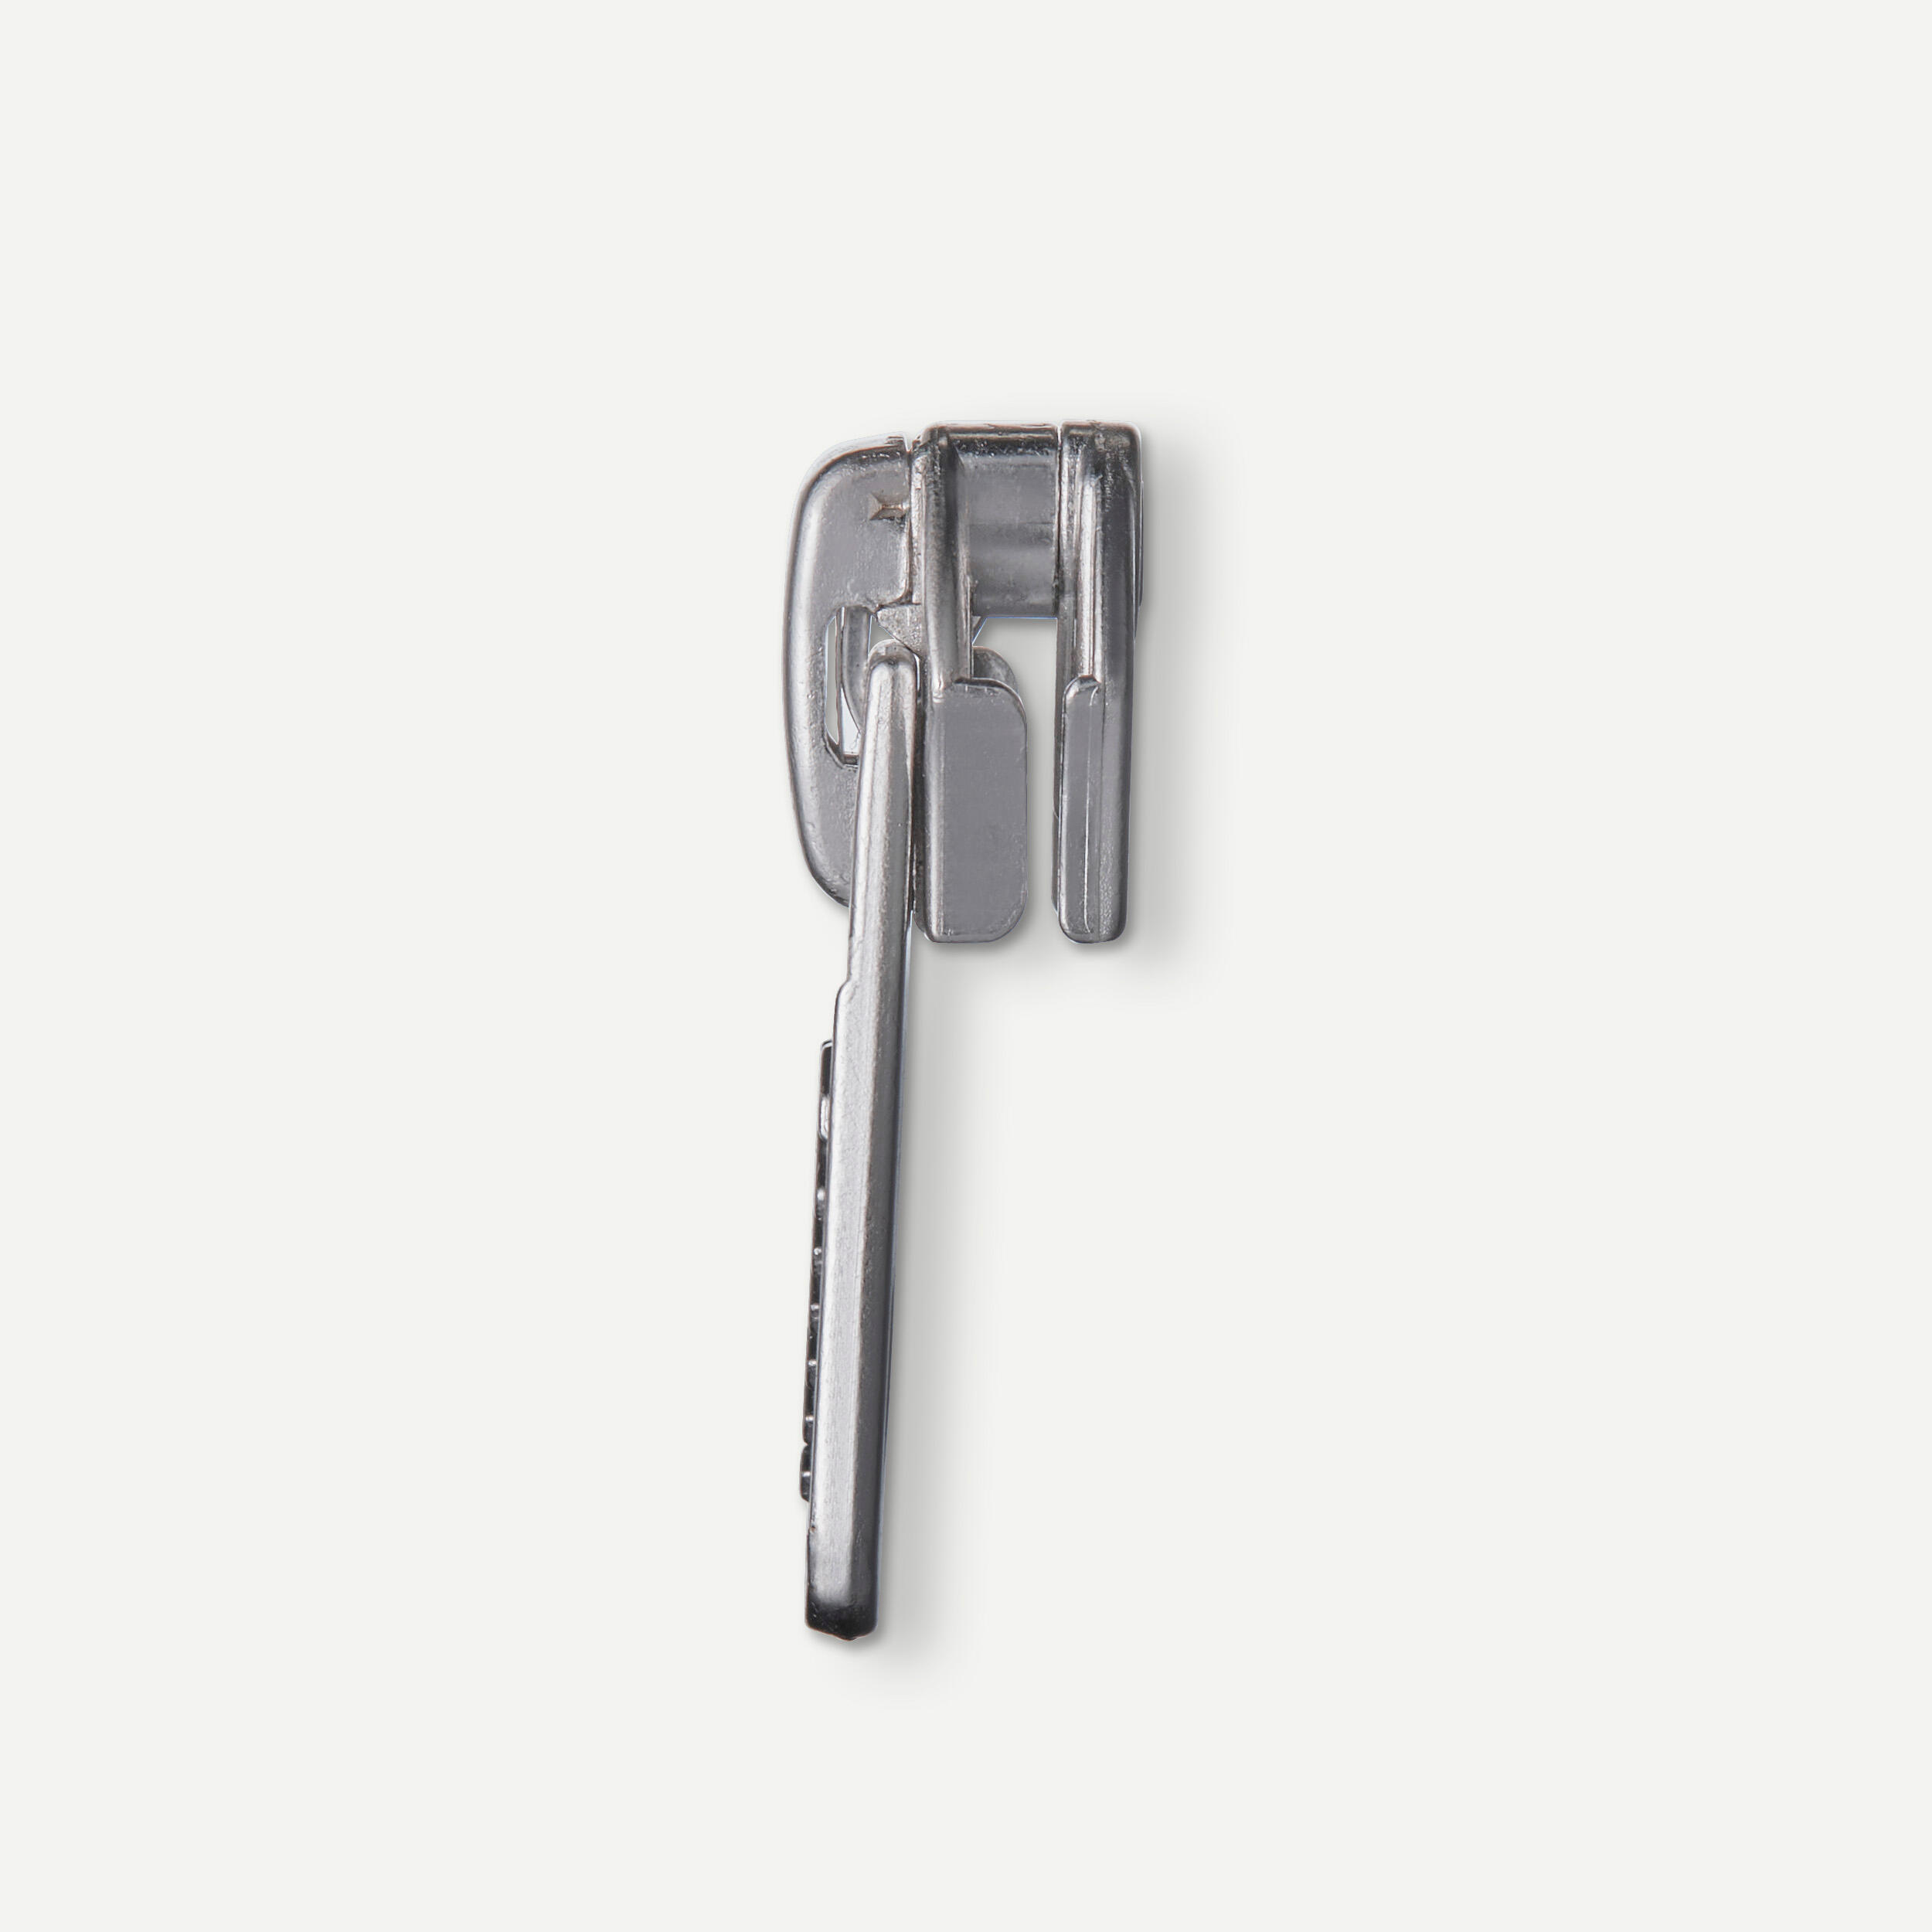 Repairable self-locking slider for 6 mm coil zip. 4/5